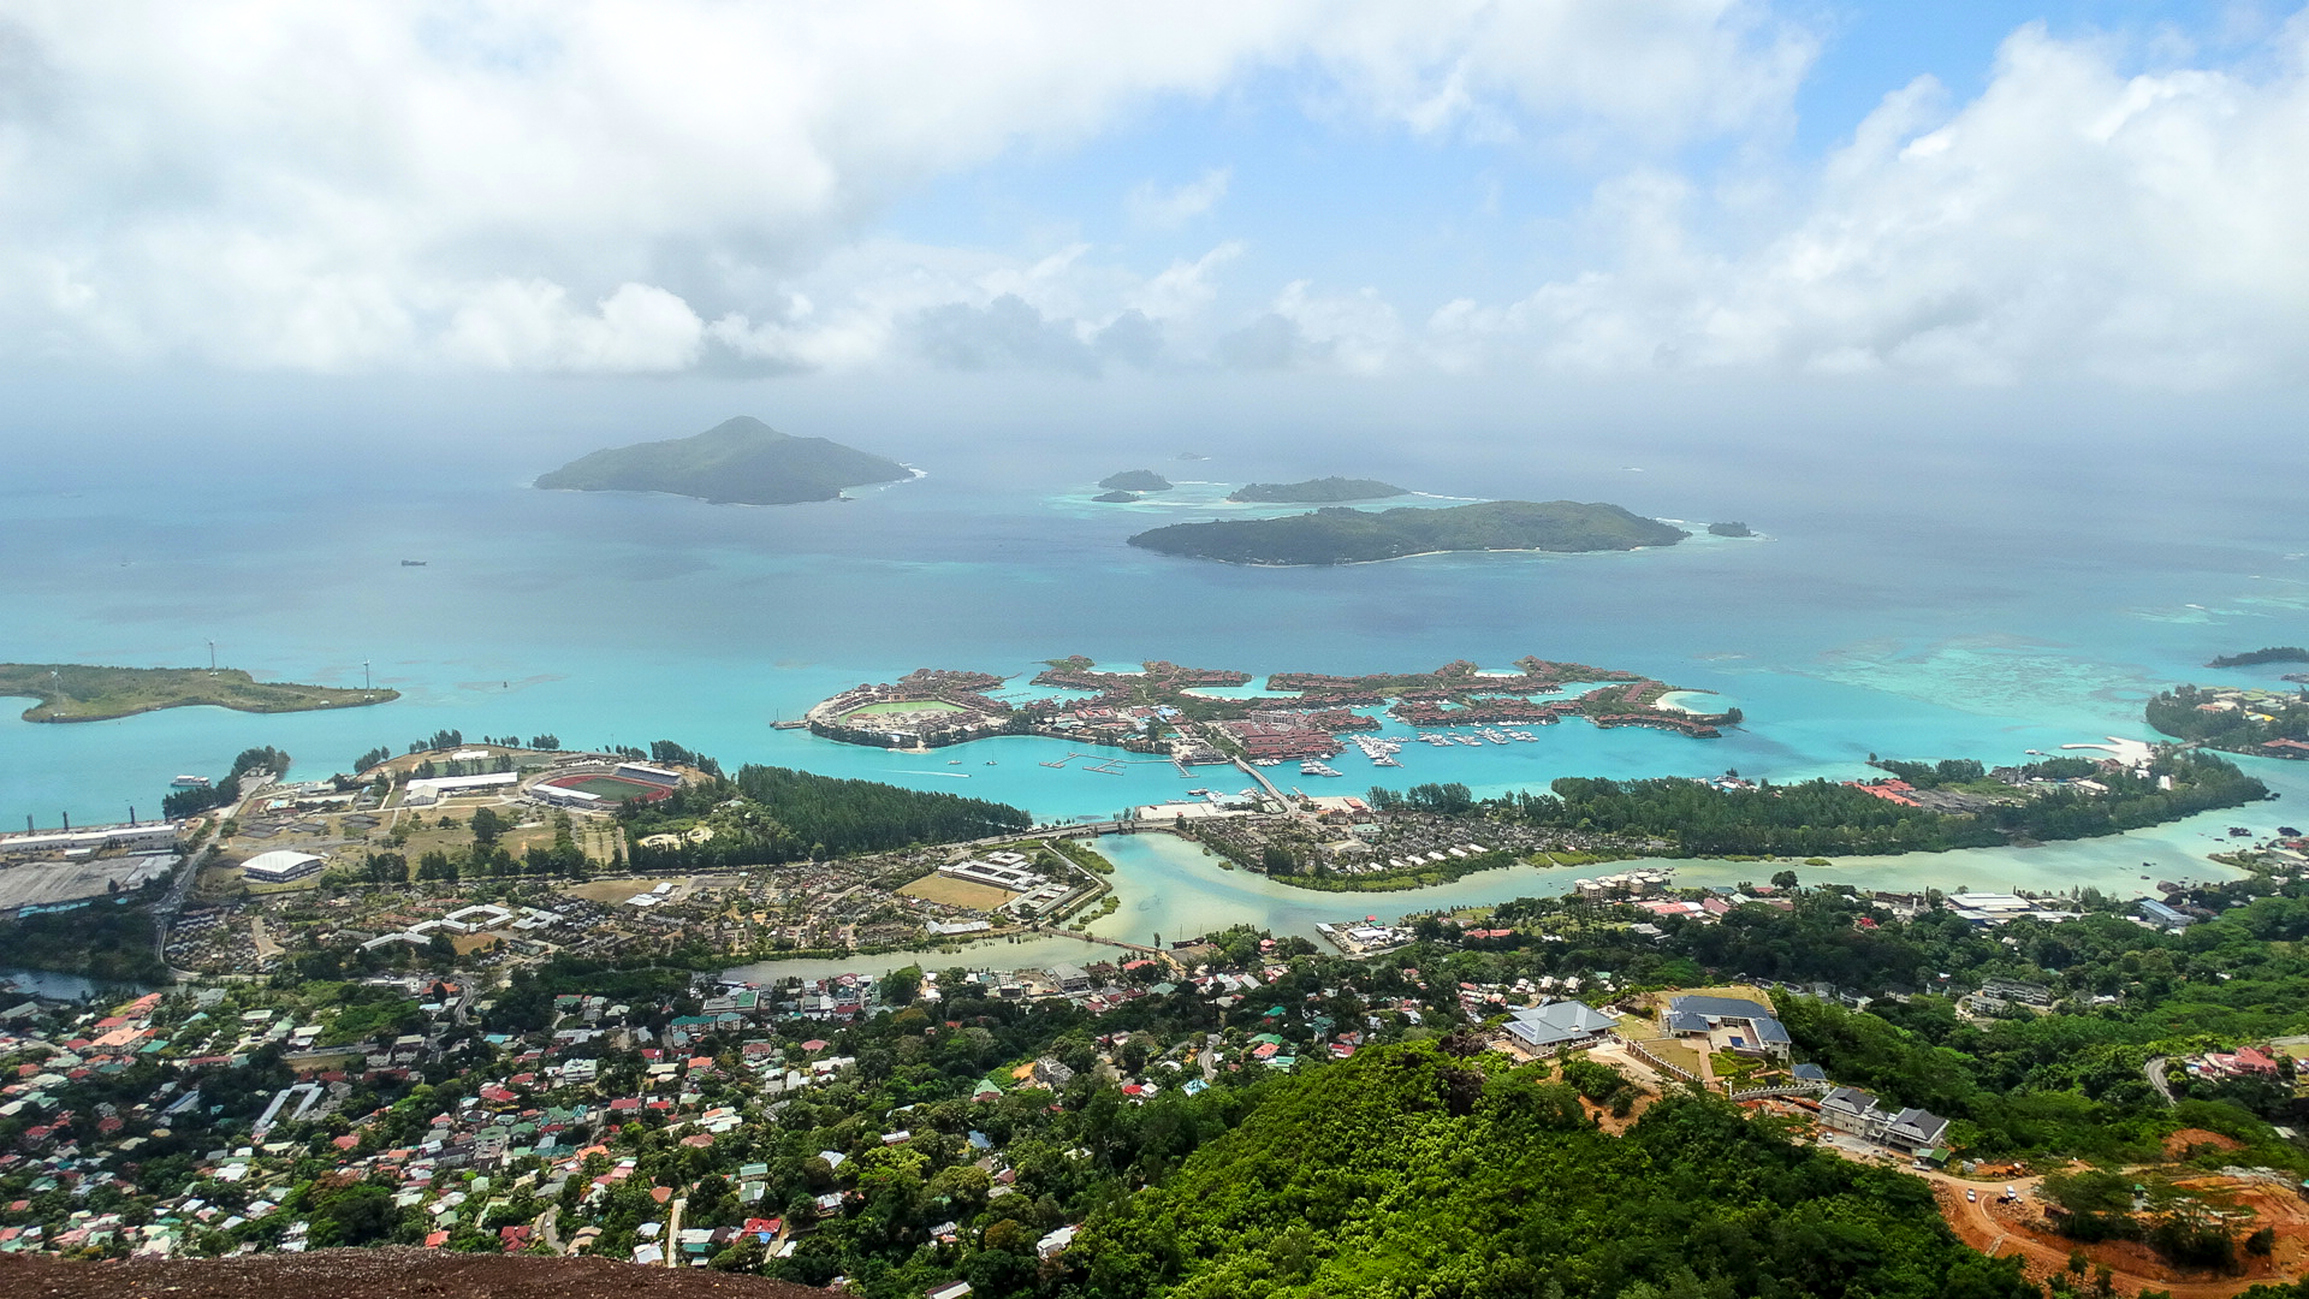 View of Seychelles islands